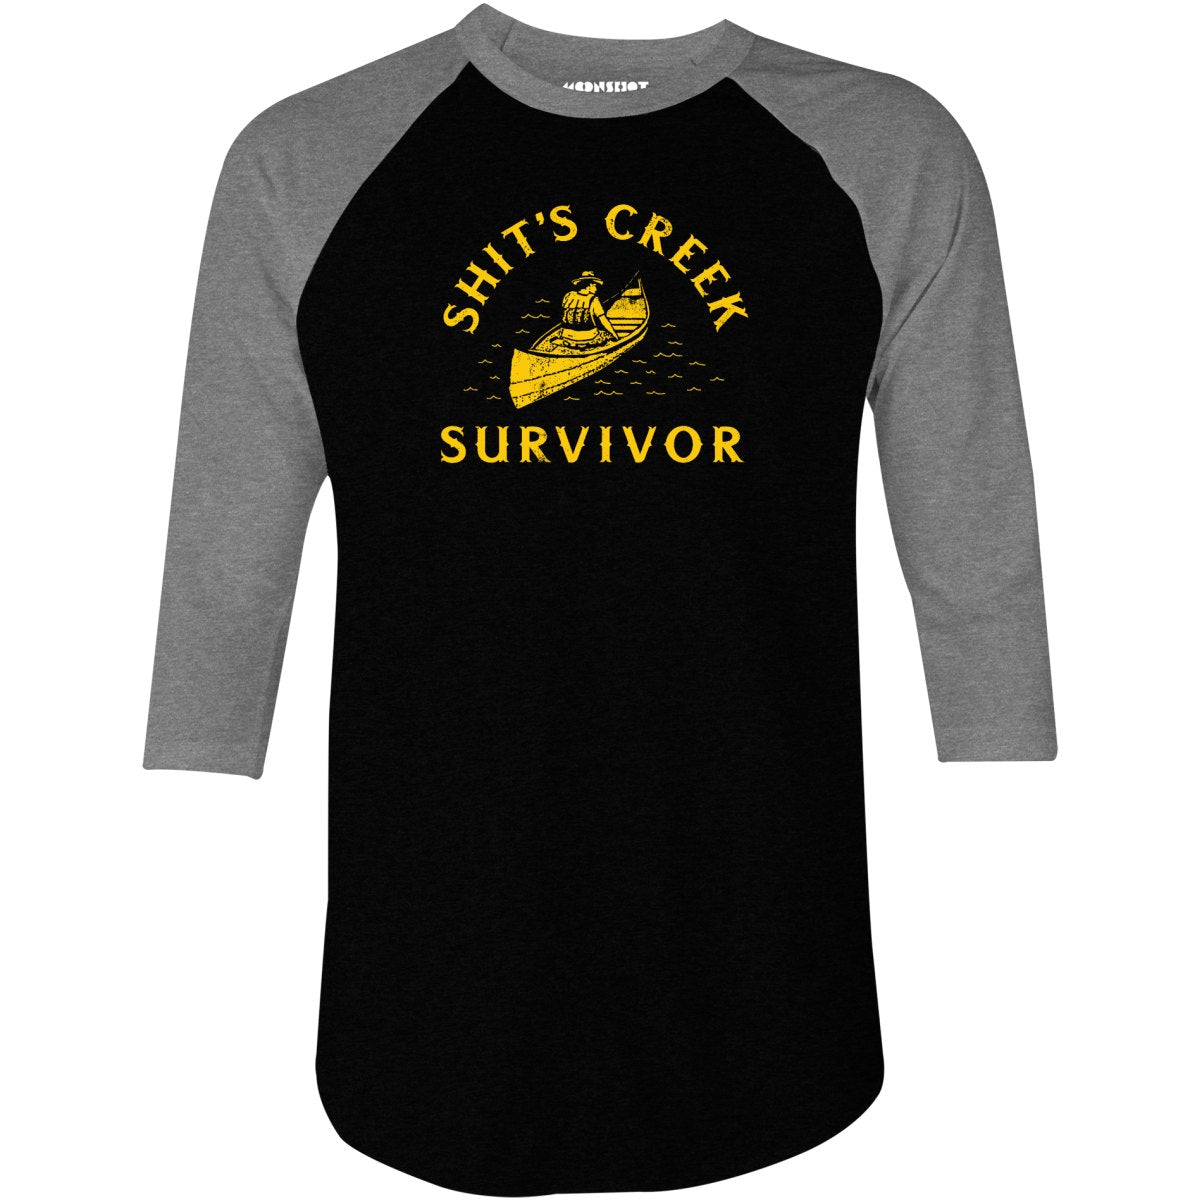 Shit's Creek Survivor - 3/4 Sleeve Raglan T-Shirt